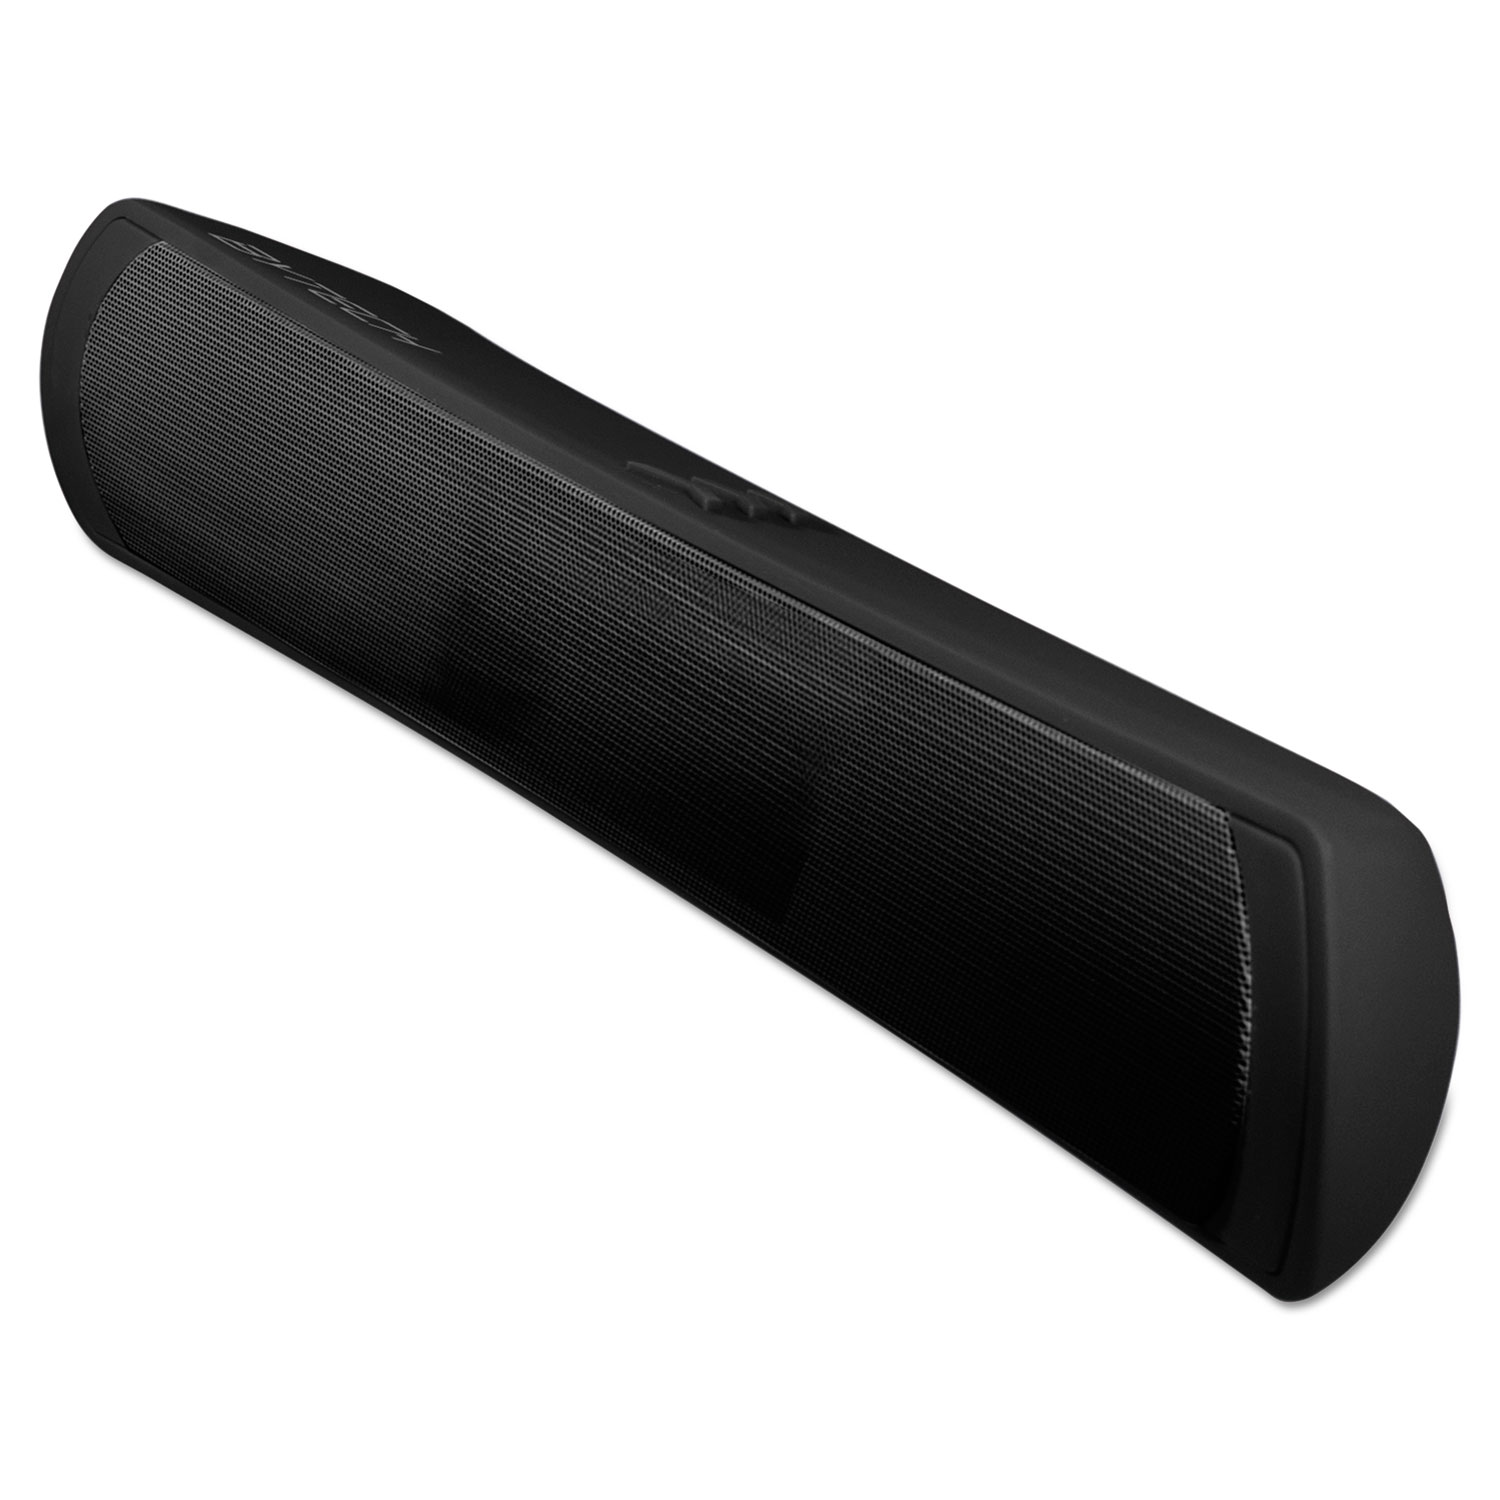 Groove Portable Wireless Speaker, Black